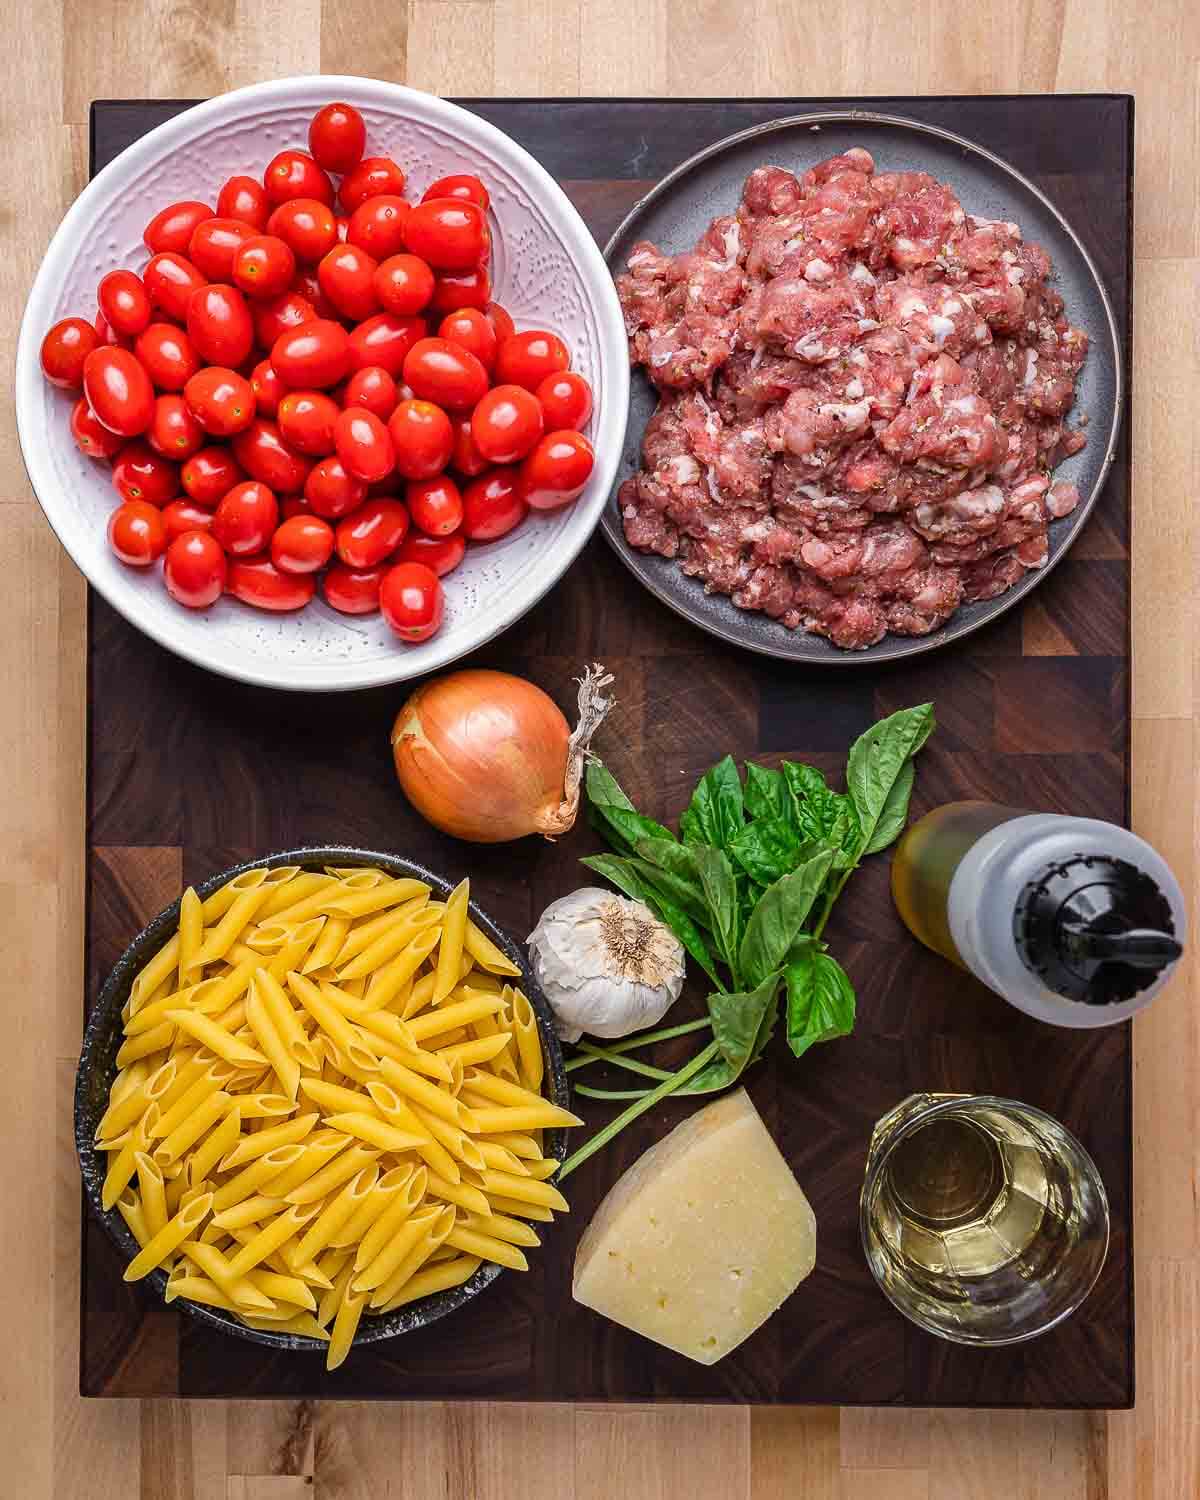 Ingredients shown: cherry tomatoes, bulk sausage, onion, garlic, basil, olive oil, white wine, Pecorino Romano, and penne pasta.